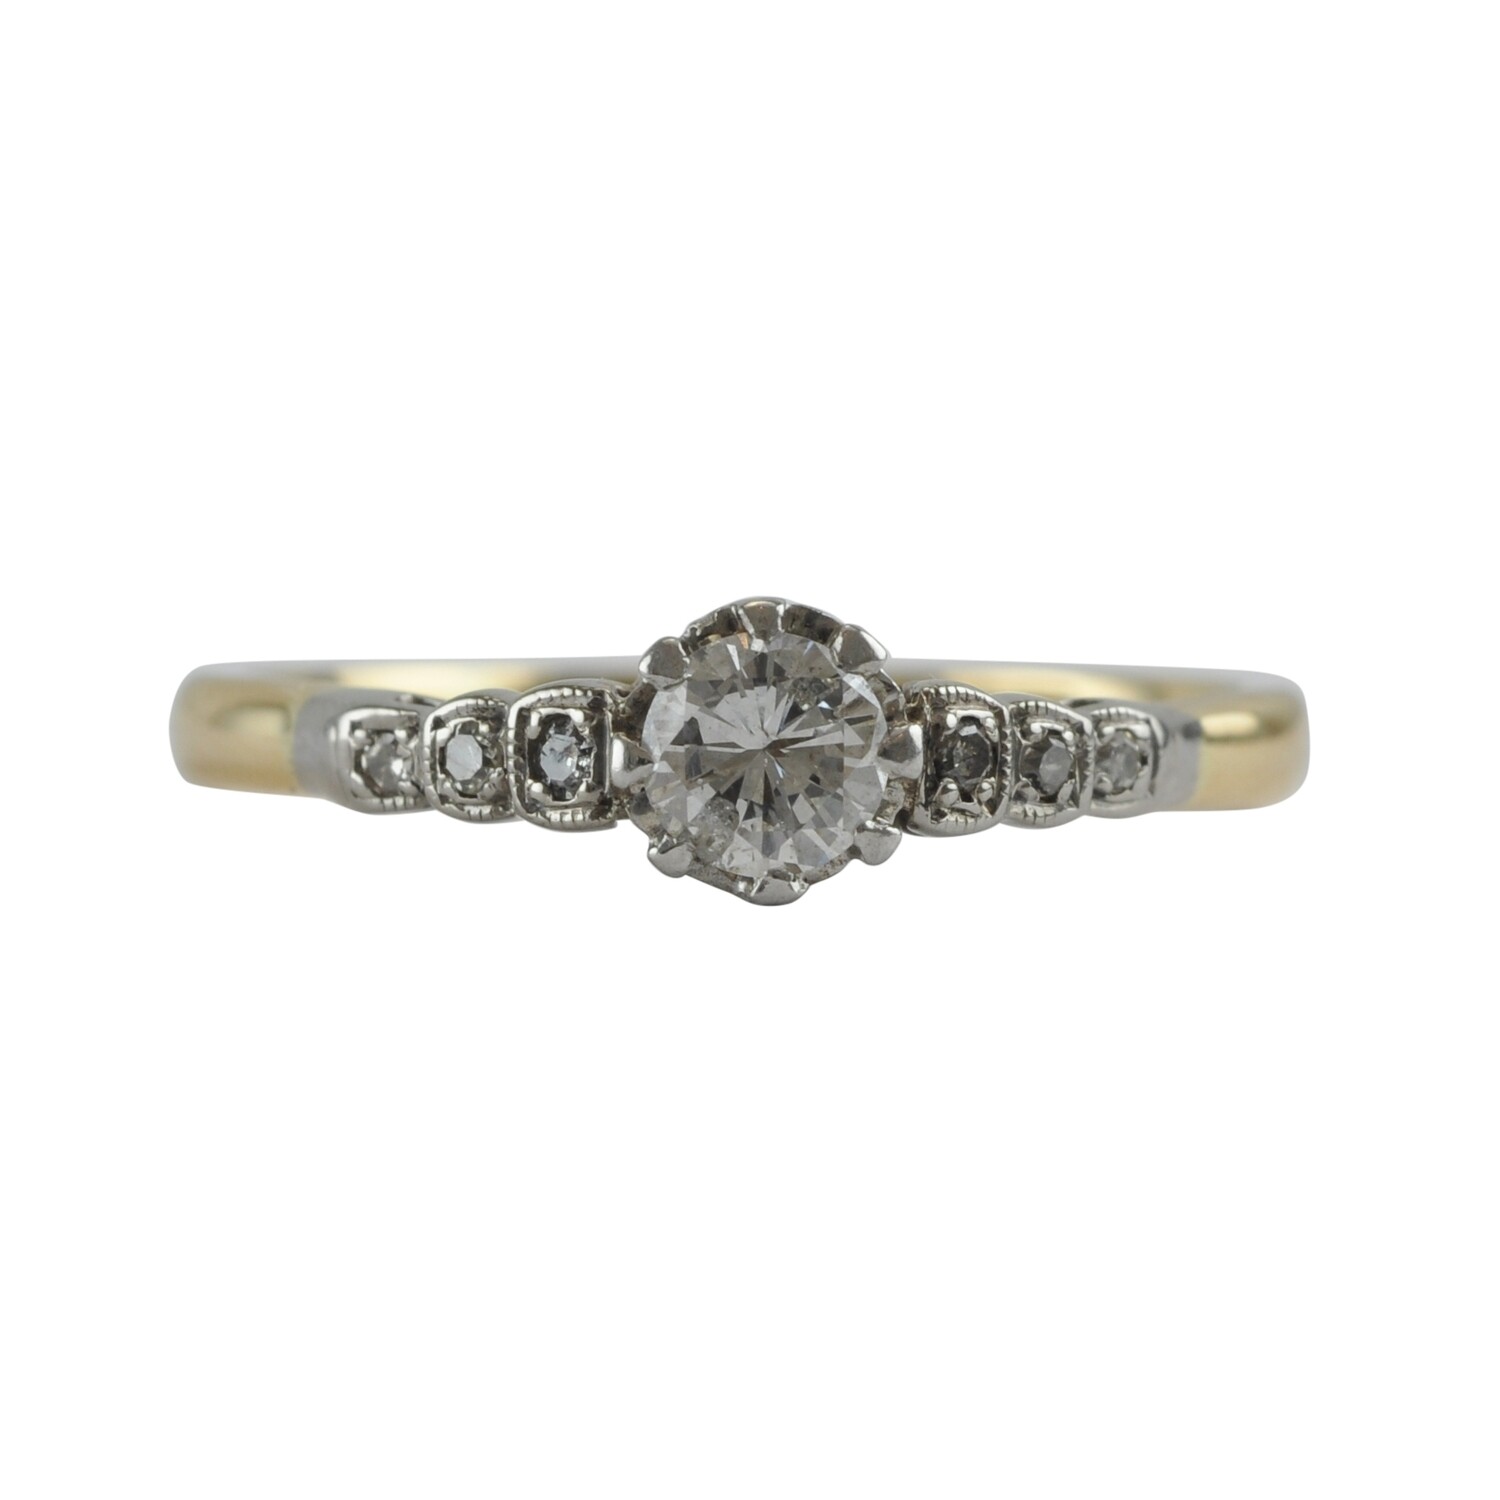 Vintage Engagement Ring With Diamond Set Shoulders